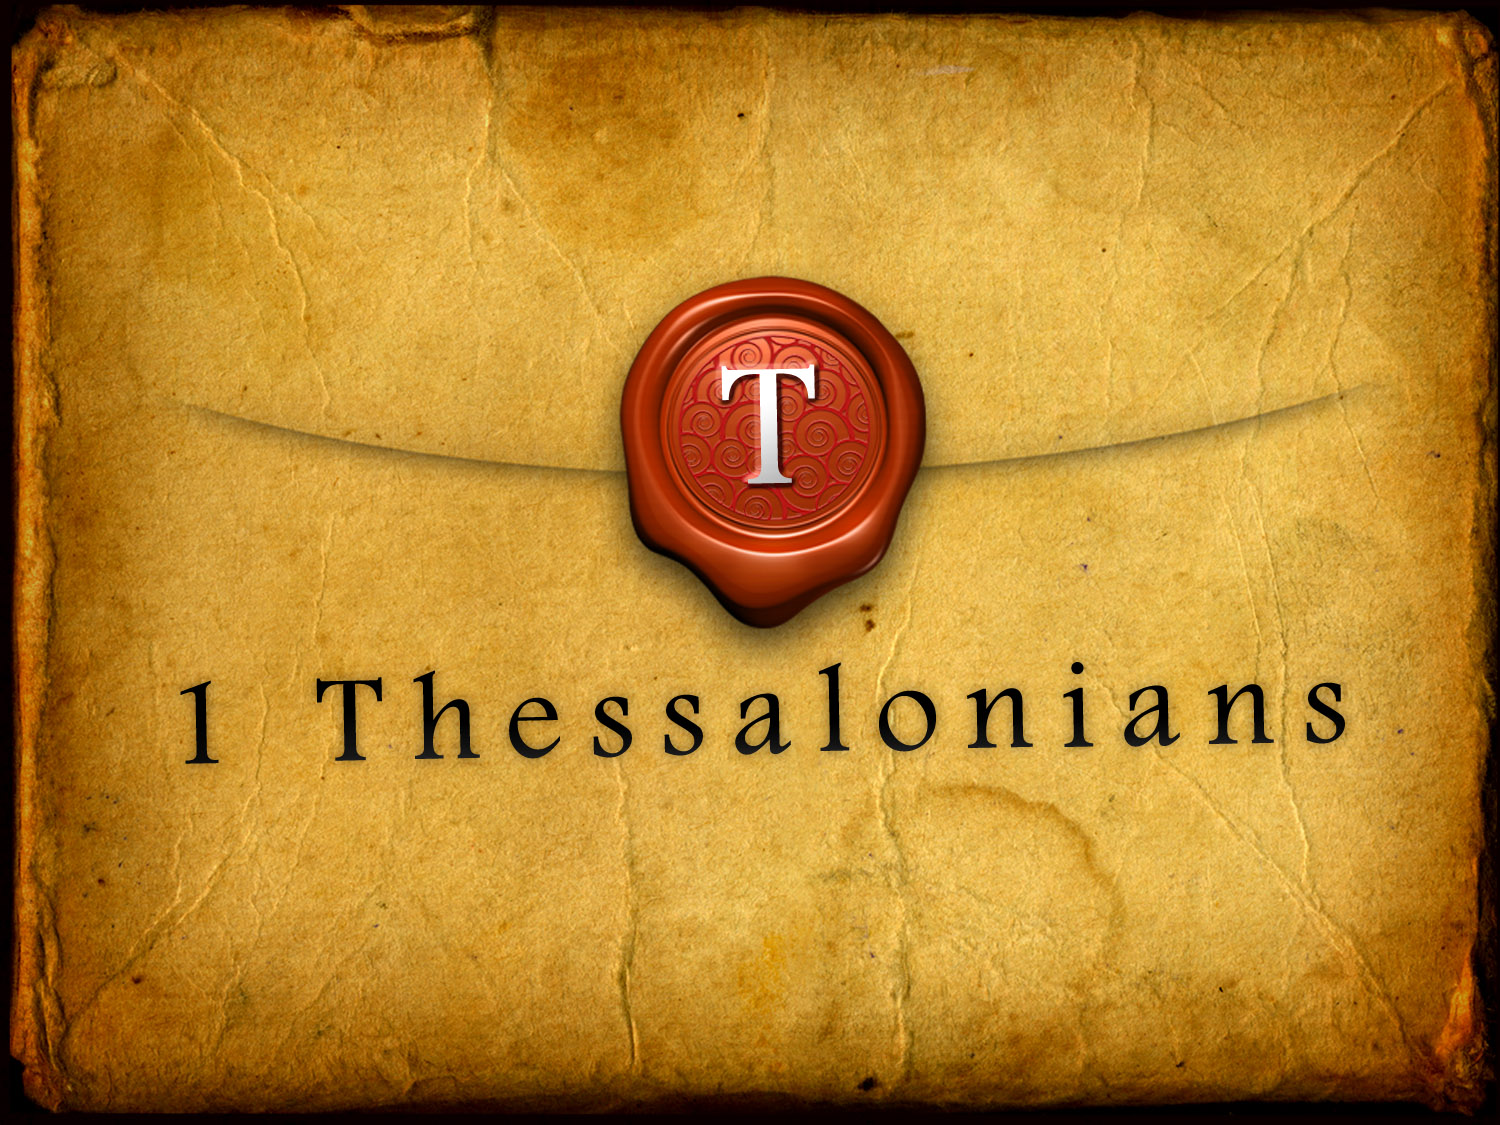 1 Thessalonians 5:15-18